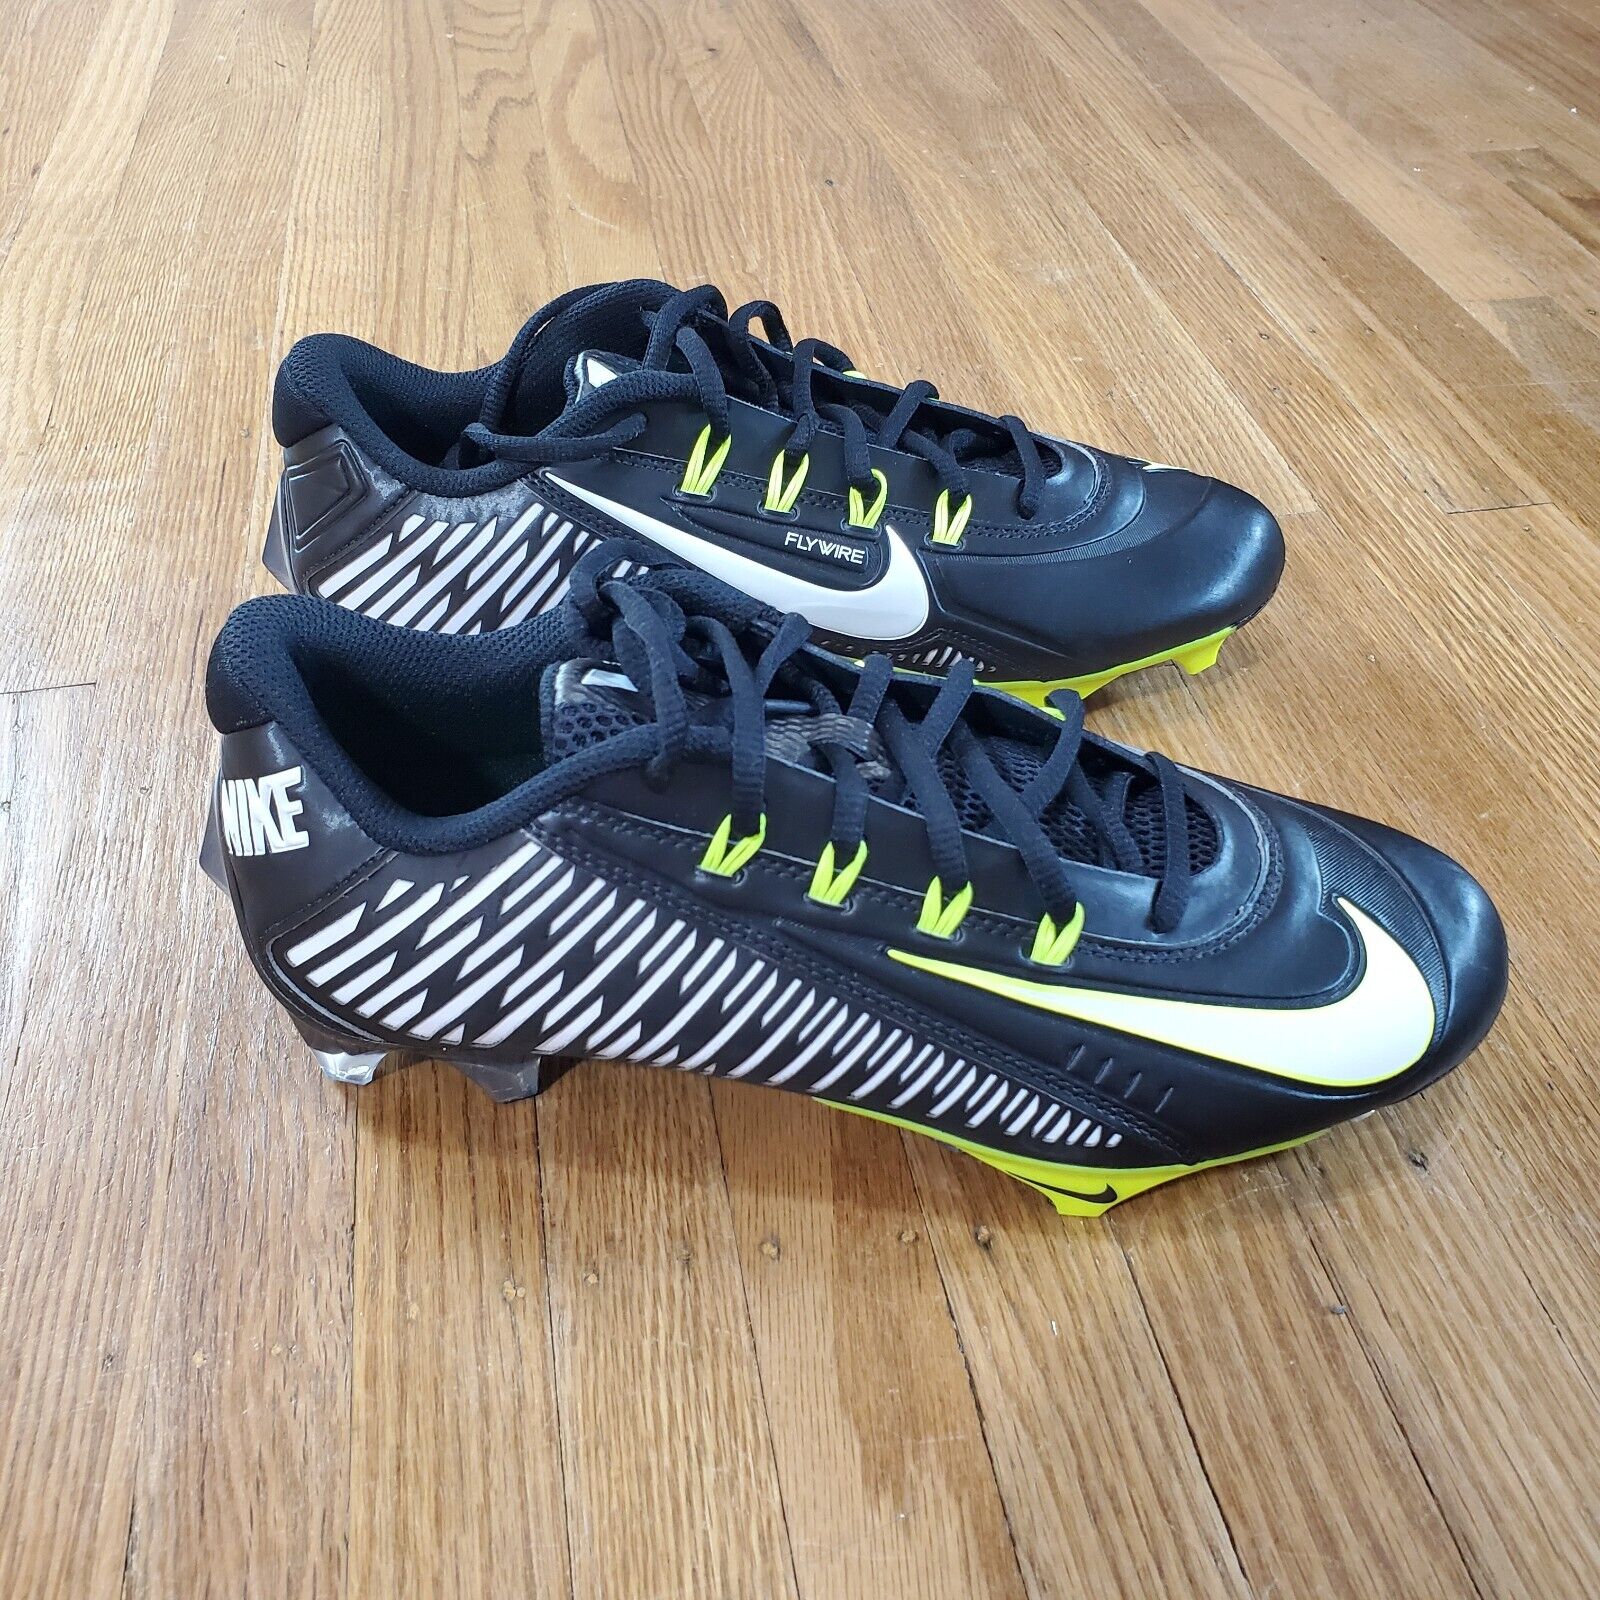 Nike Vapor Edge 360 VC Vapor Carbon Football Cleats Size 8 DO6294-001 Black